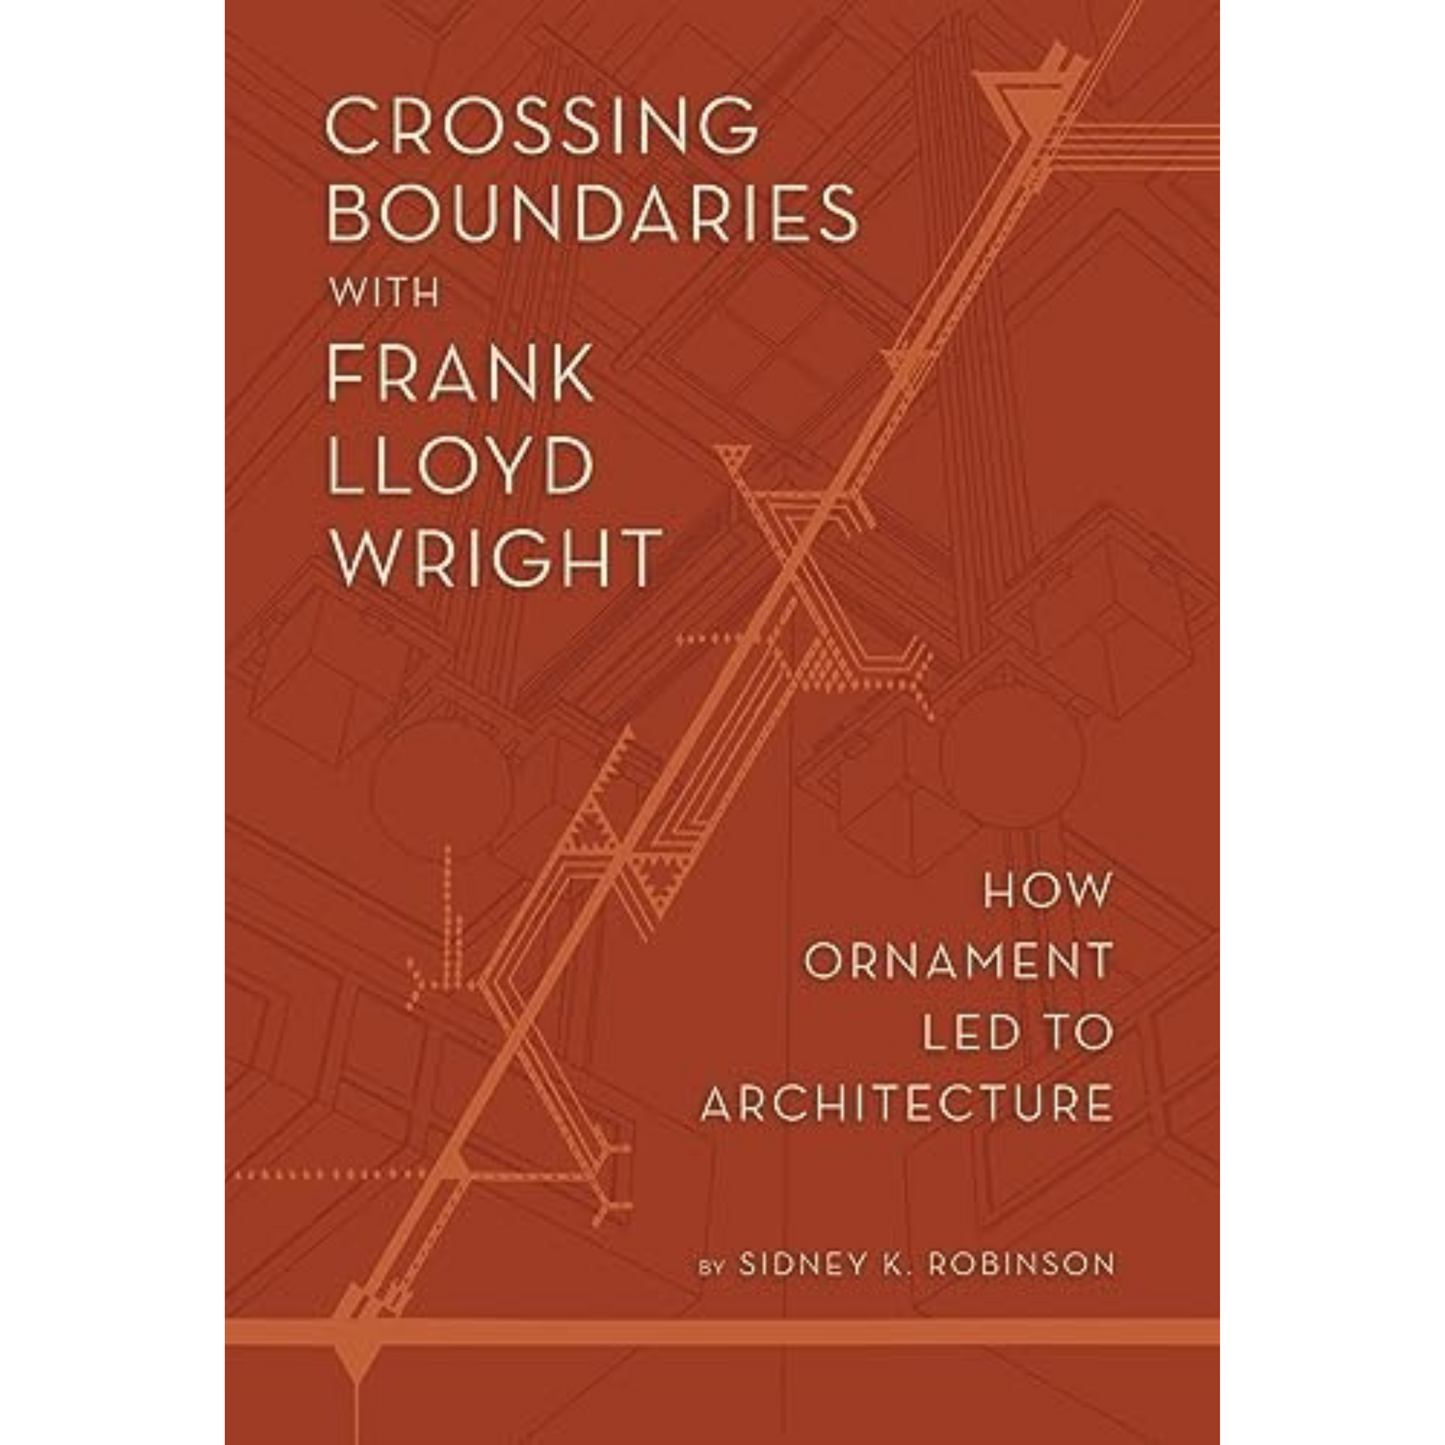 Crossing Boundaries with Frank Lloyd Wright